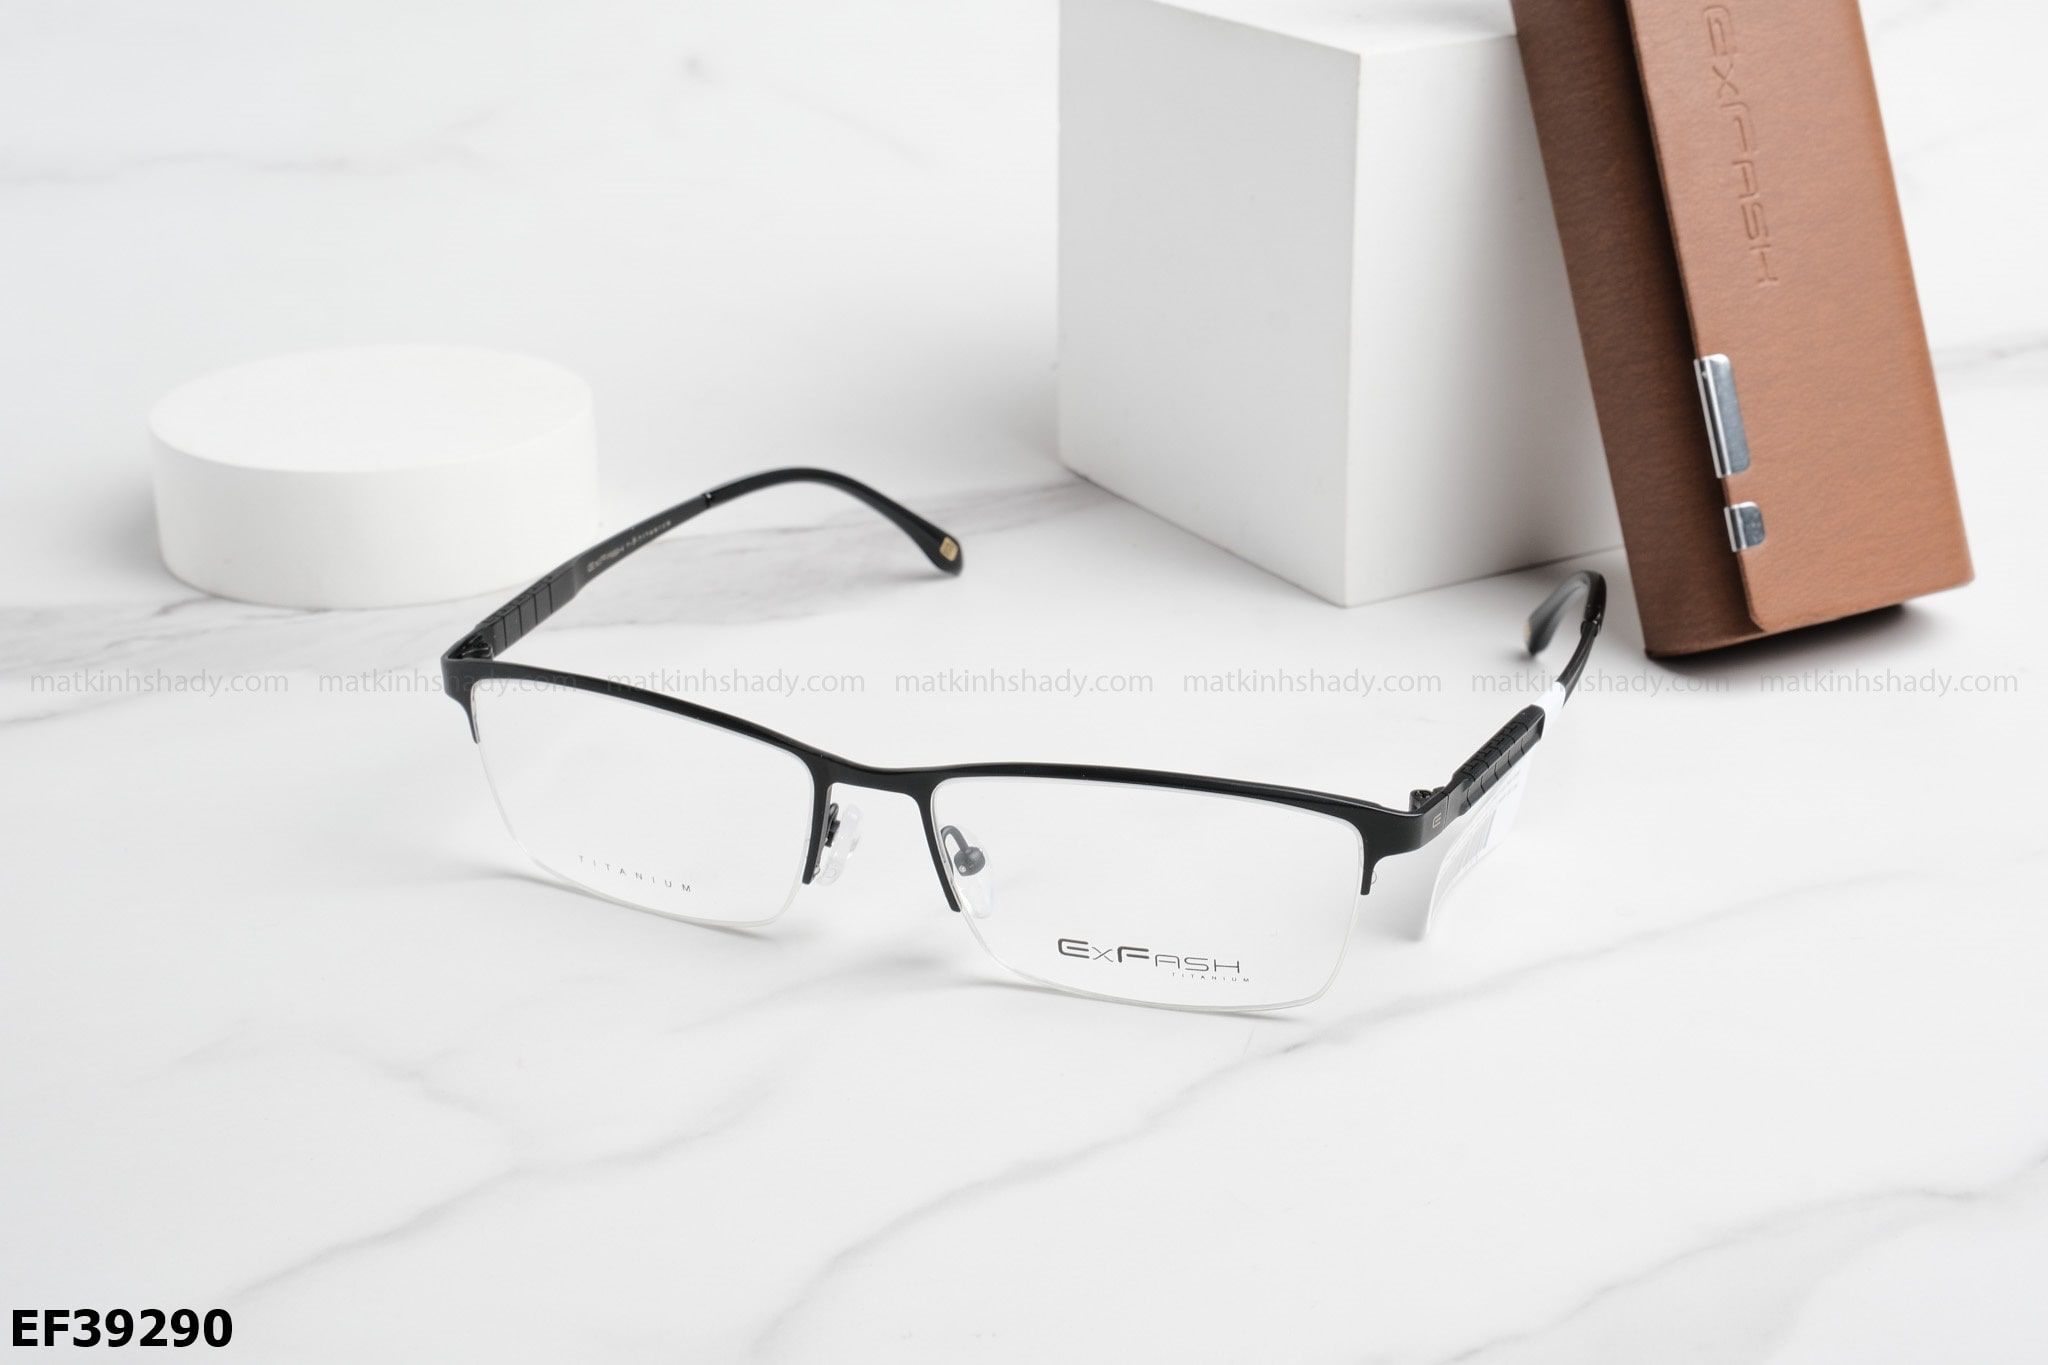  Exfash Eyewear - Glasses - EF39290 